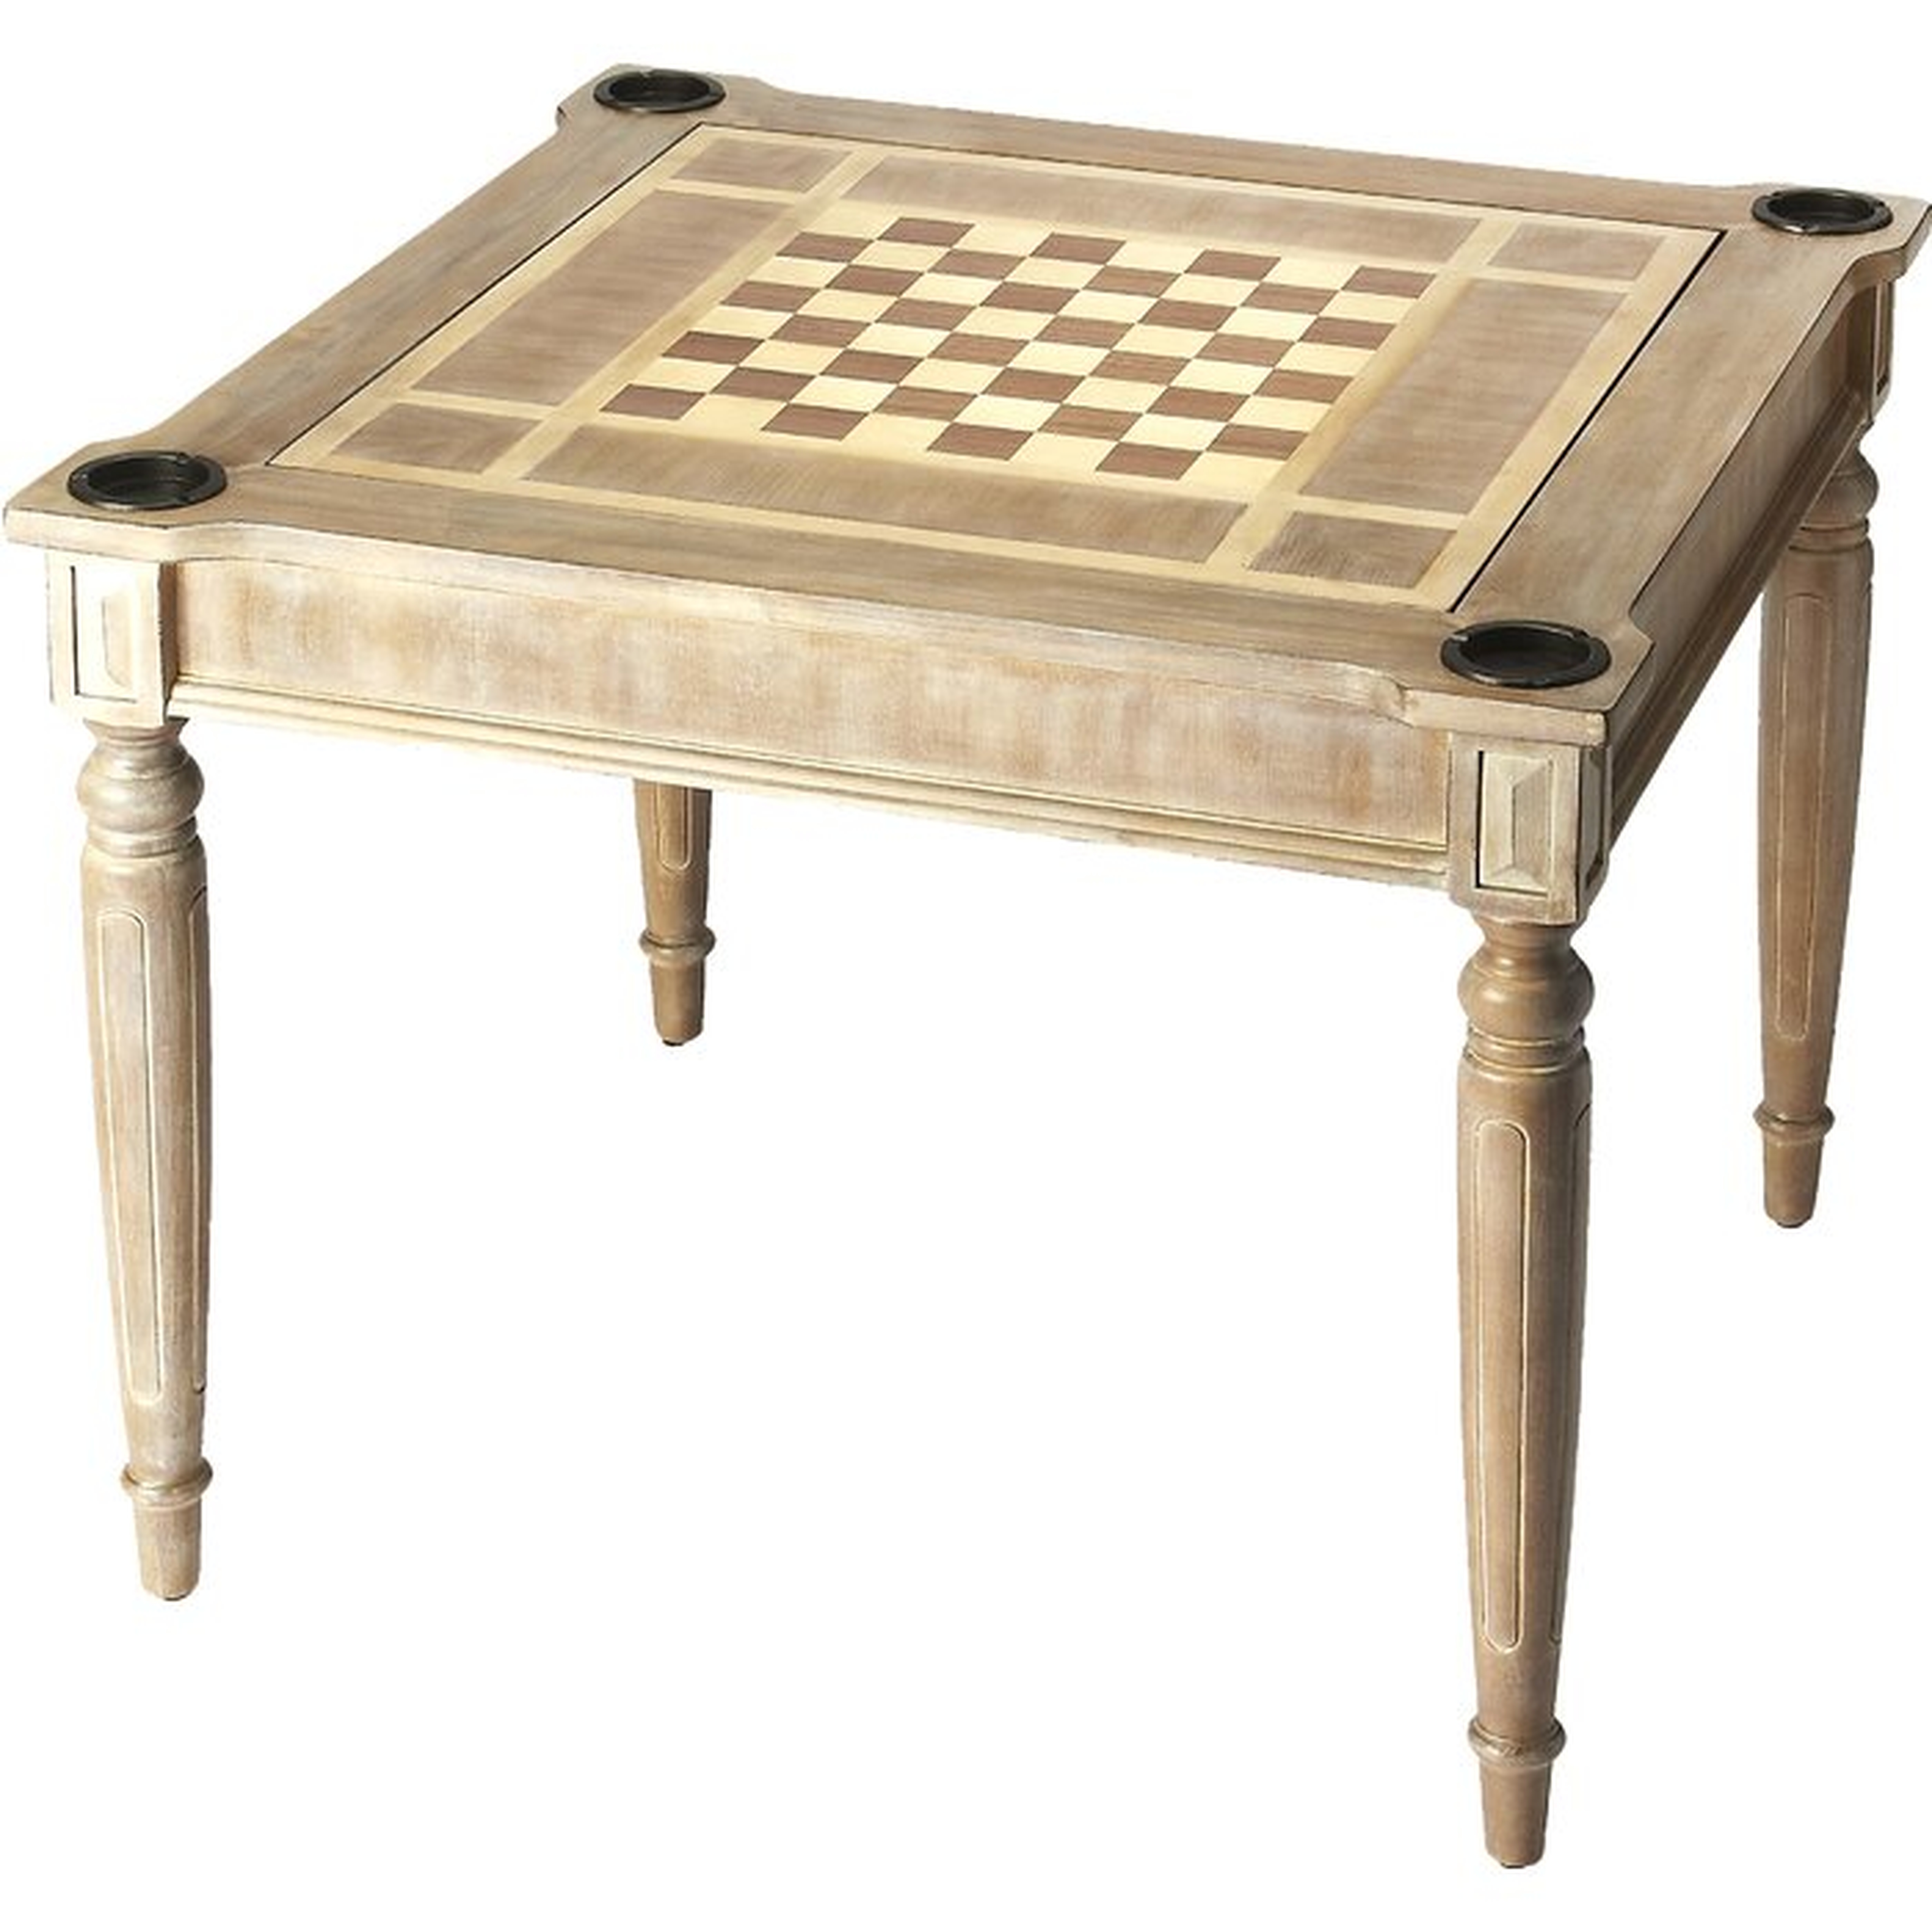 36" Mcnally Chess & Backgammon Table - Wayfair